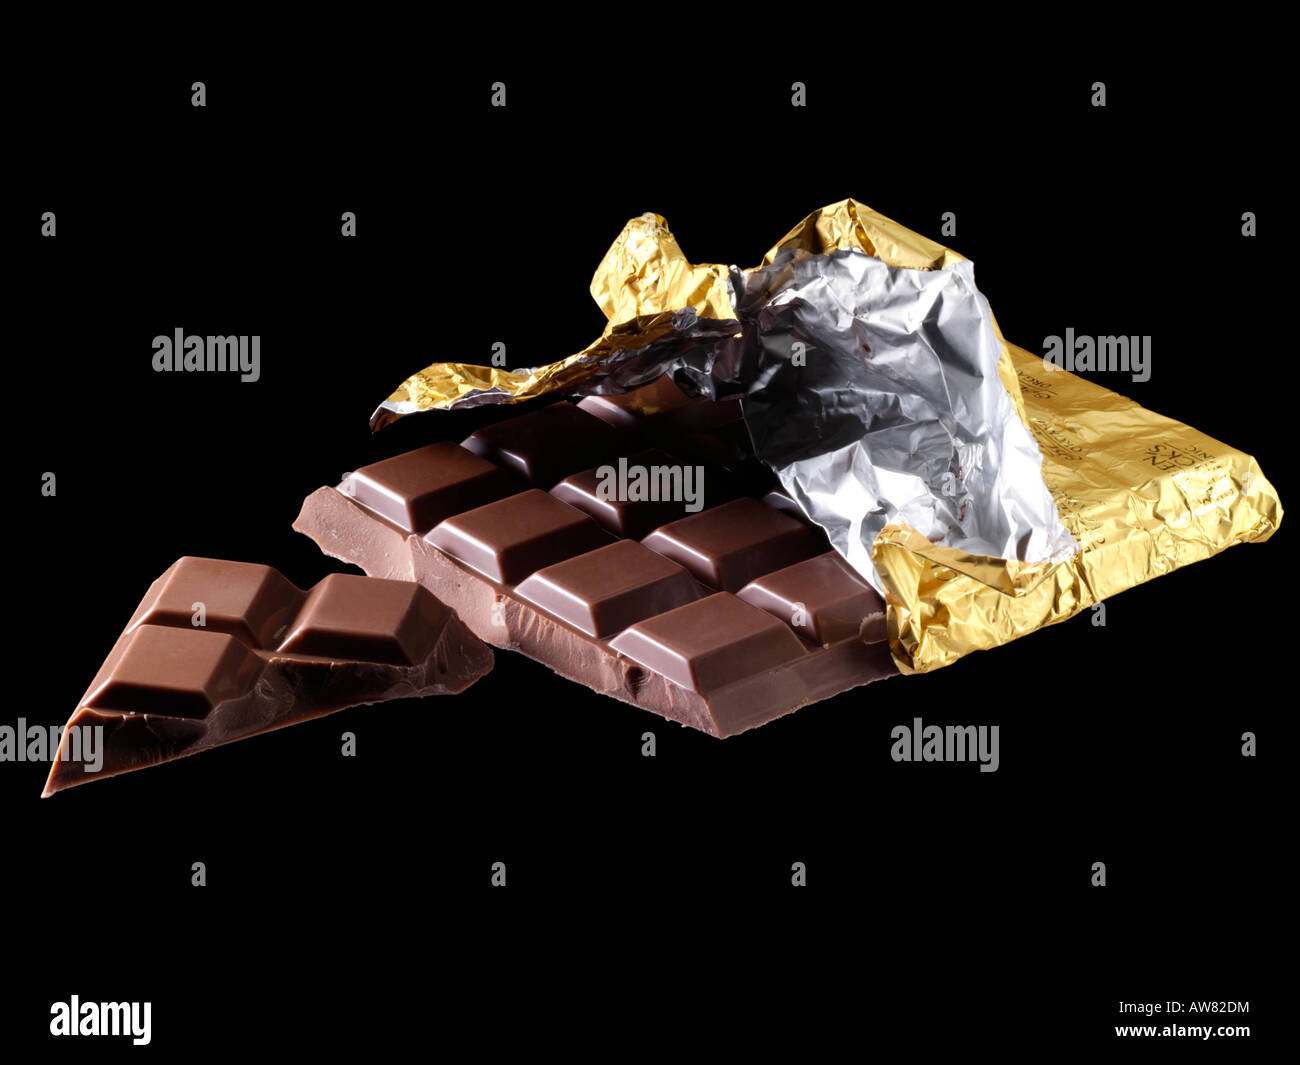 Barra de chocolate con envoltura de papel aluminio dorado Fotografía de  stock - Alamy